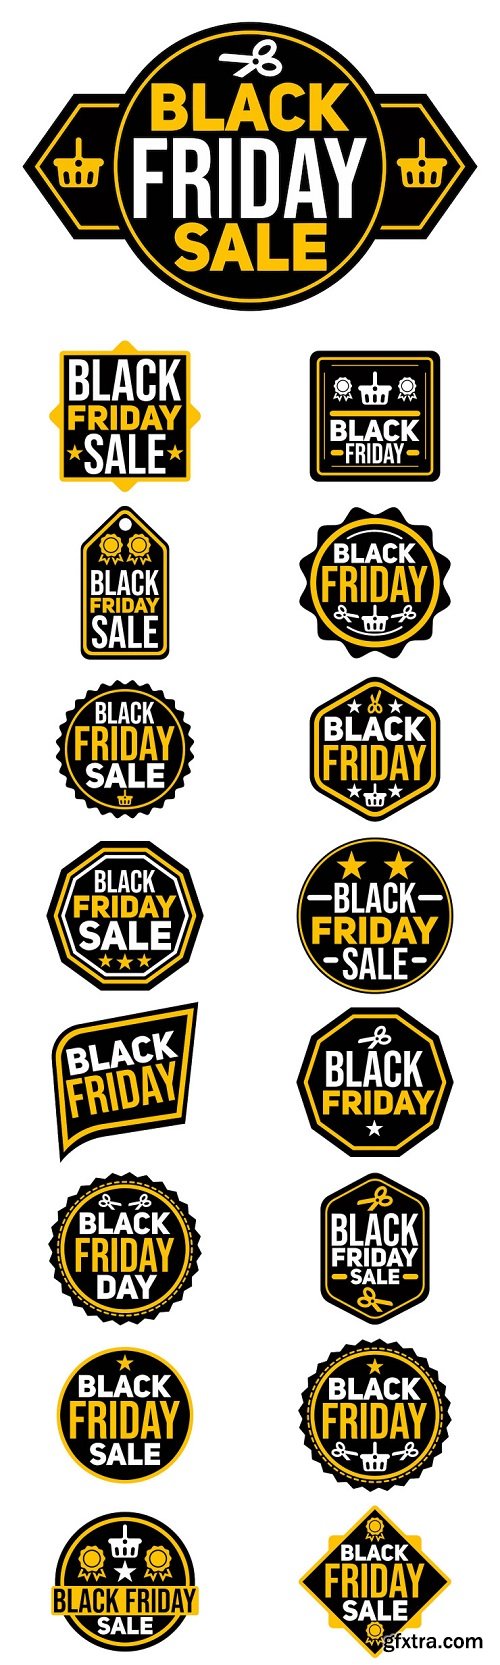 Black Friday Sale Logos